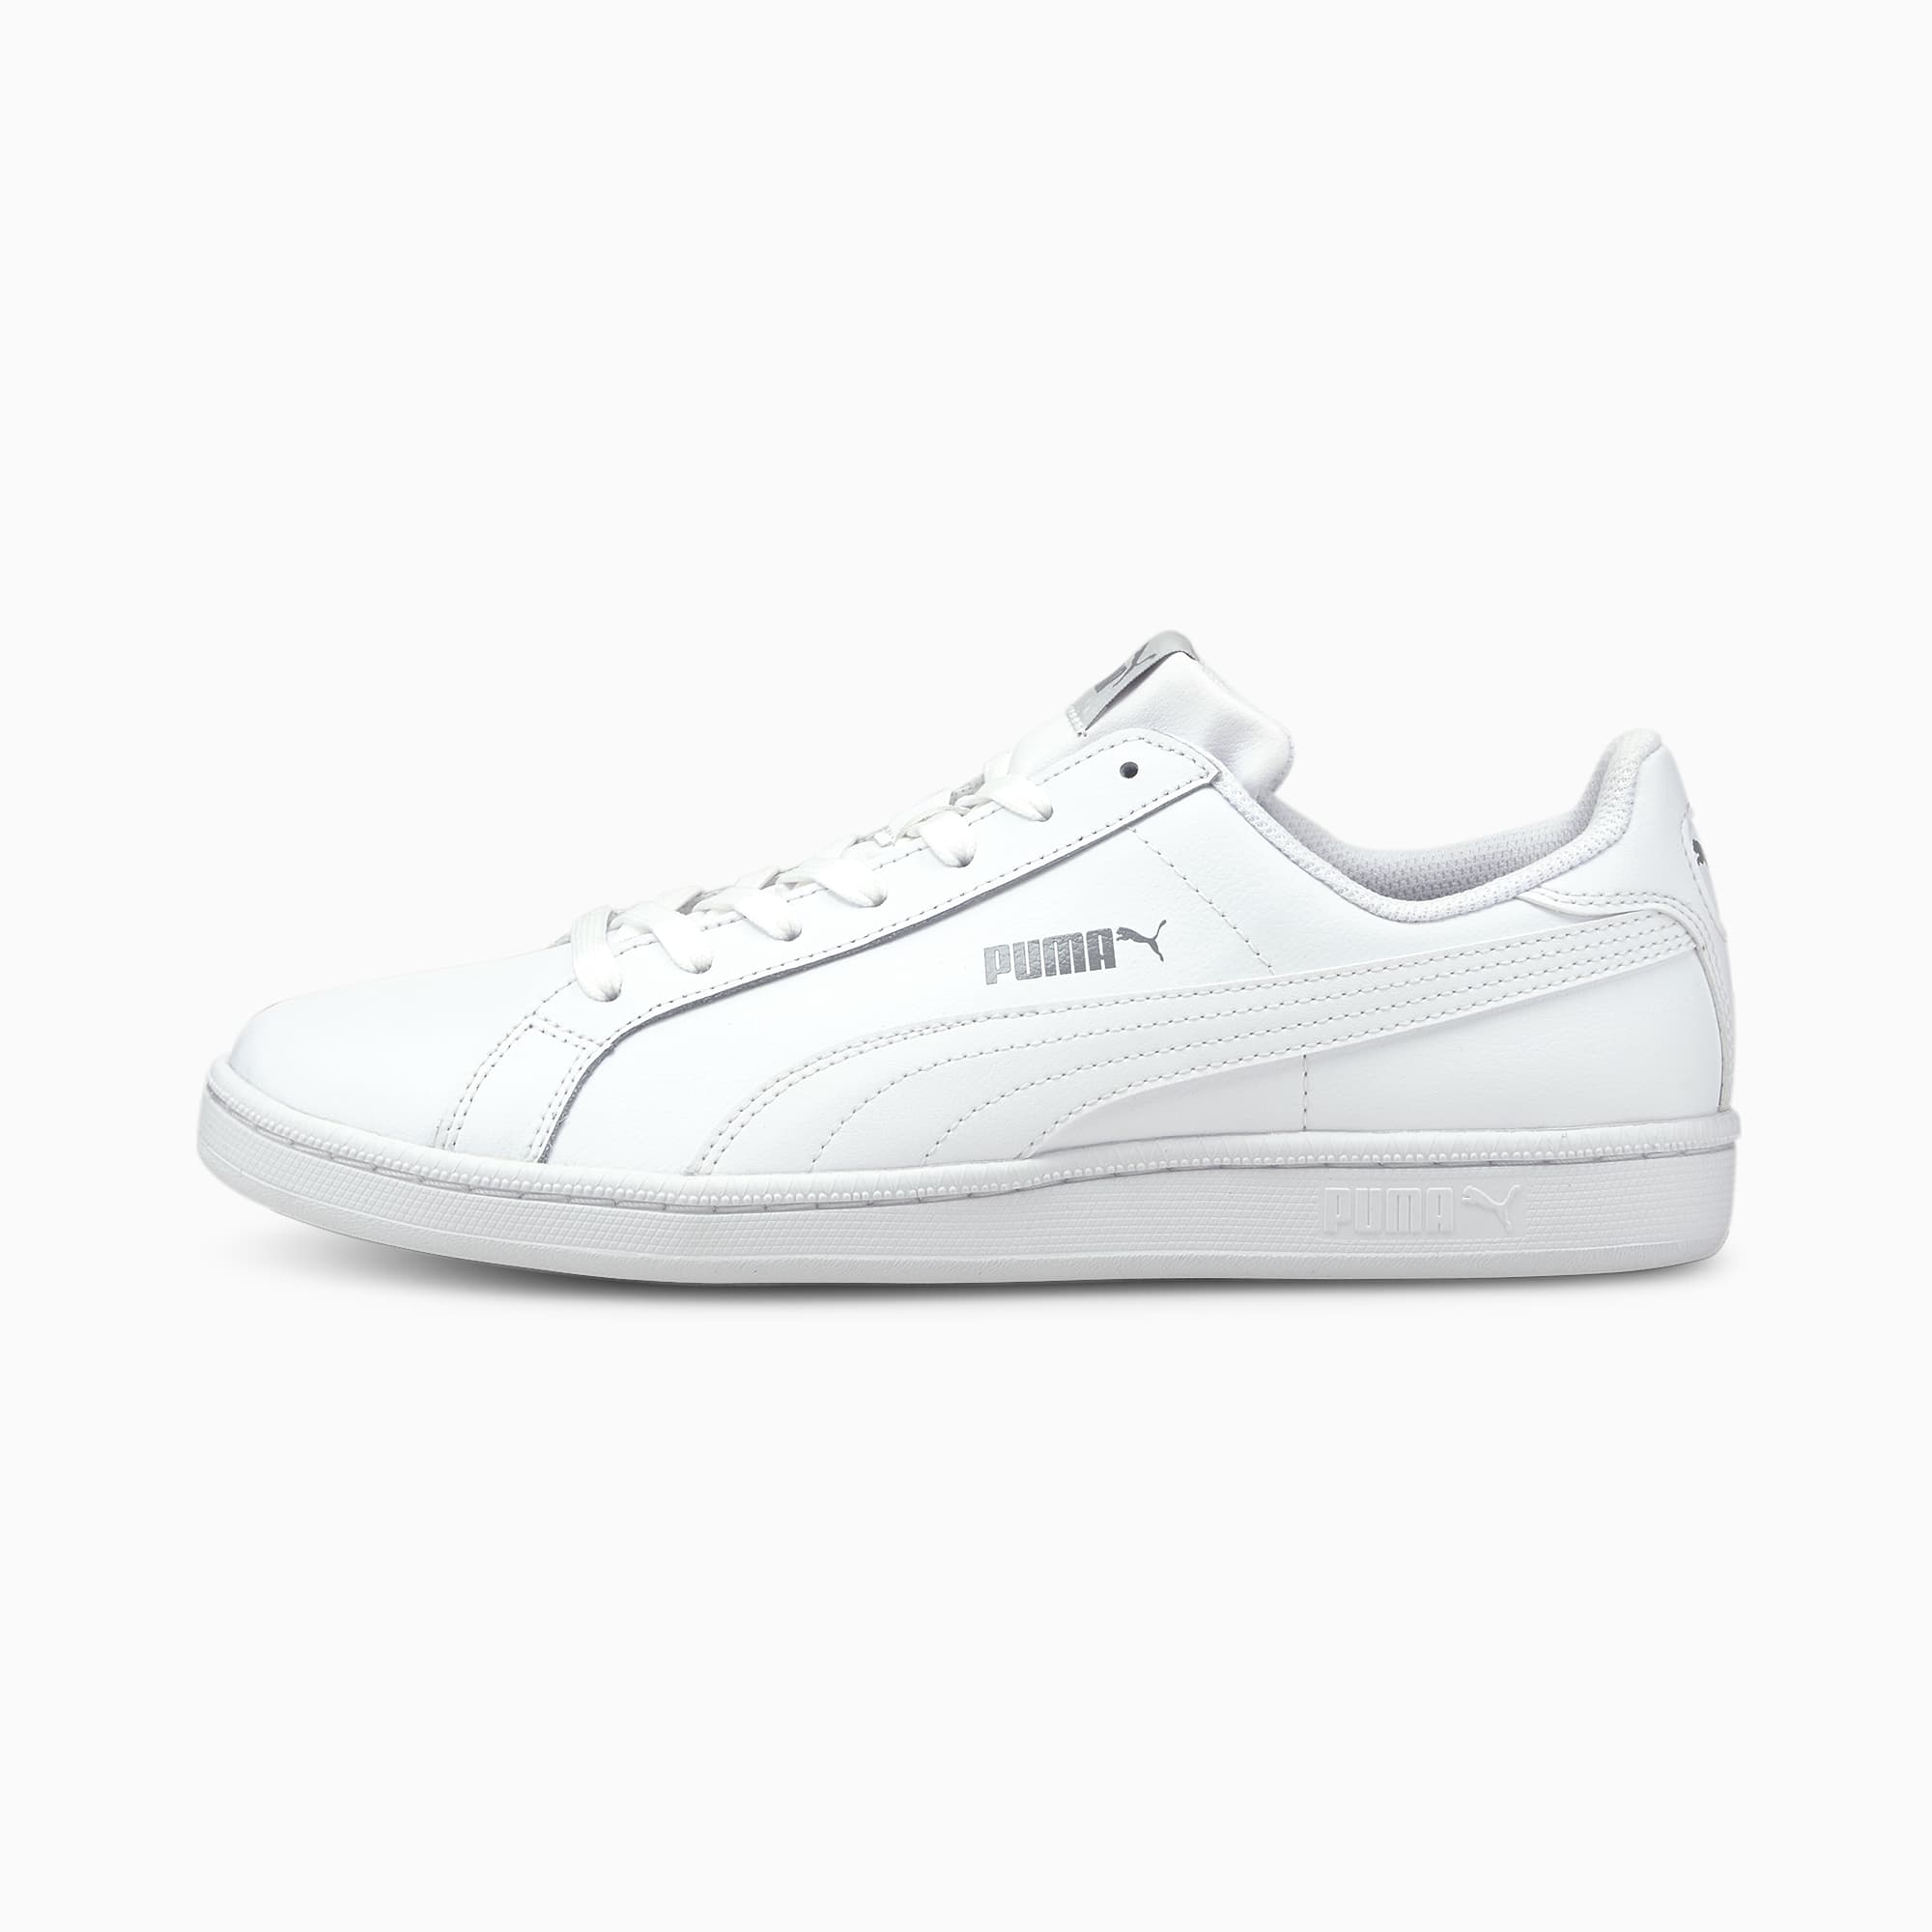 white leather puma shoes